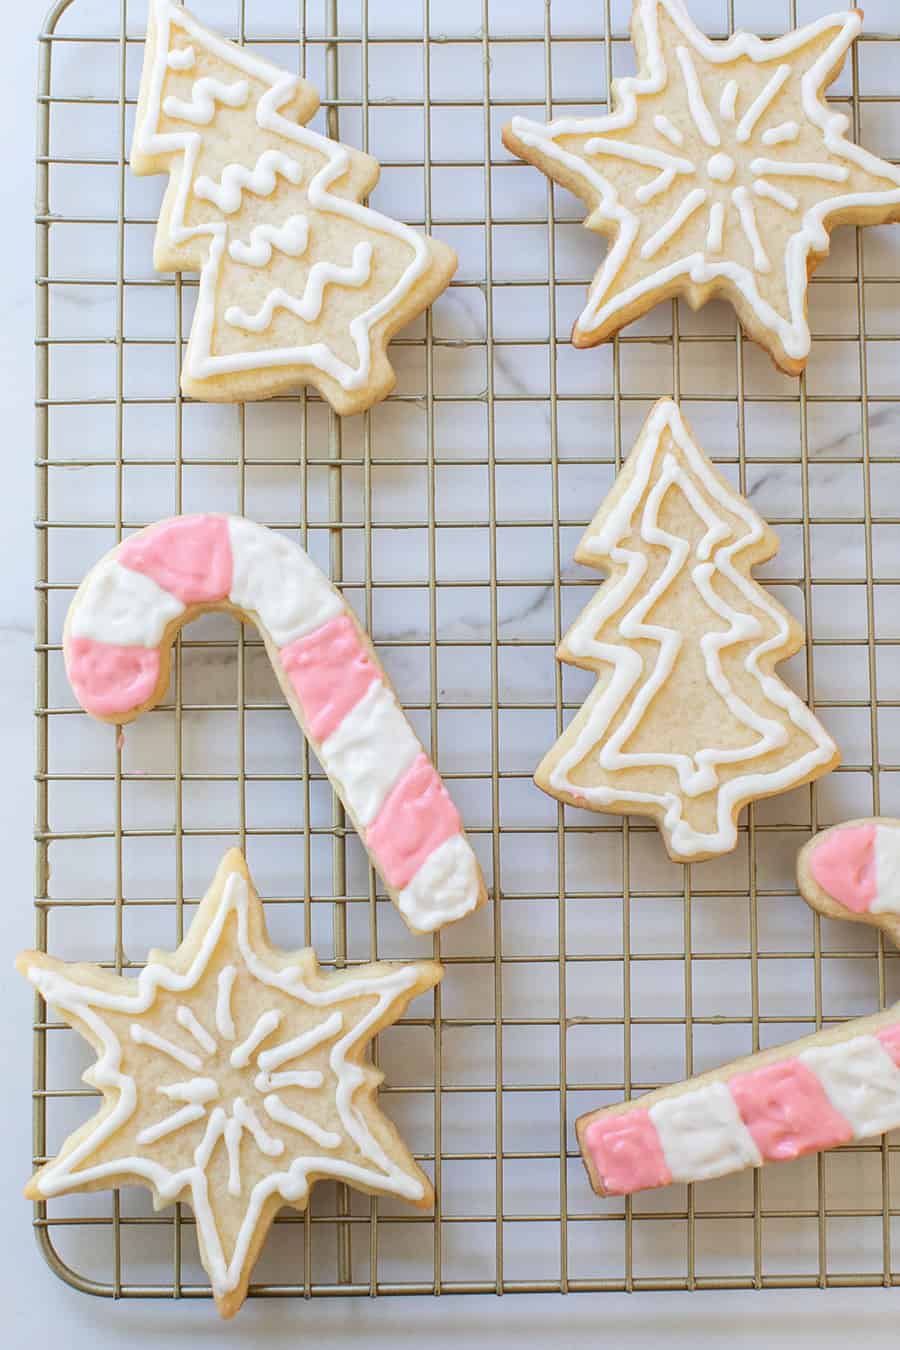 Decorated sugar cookies